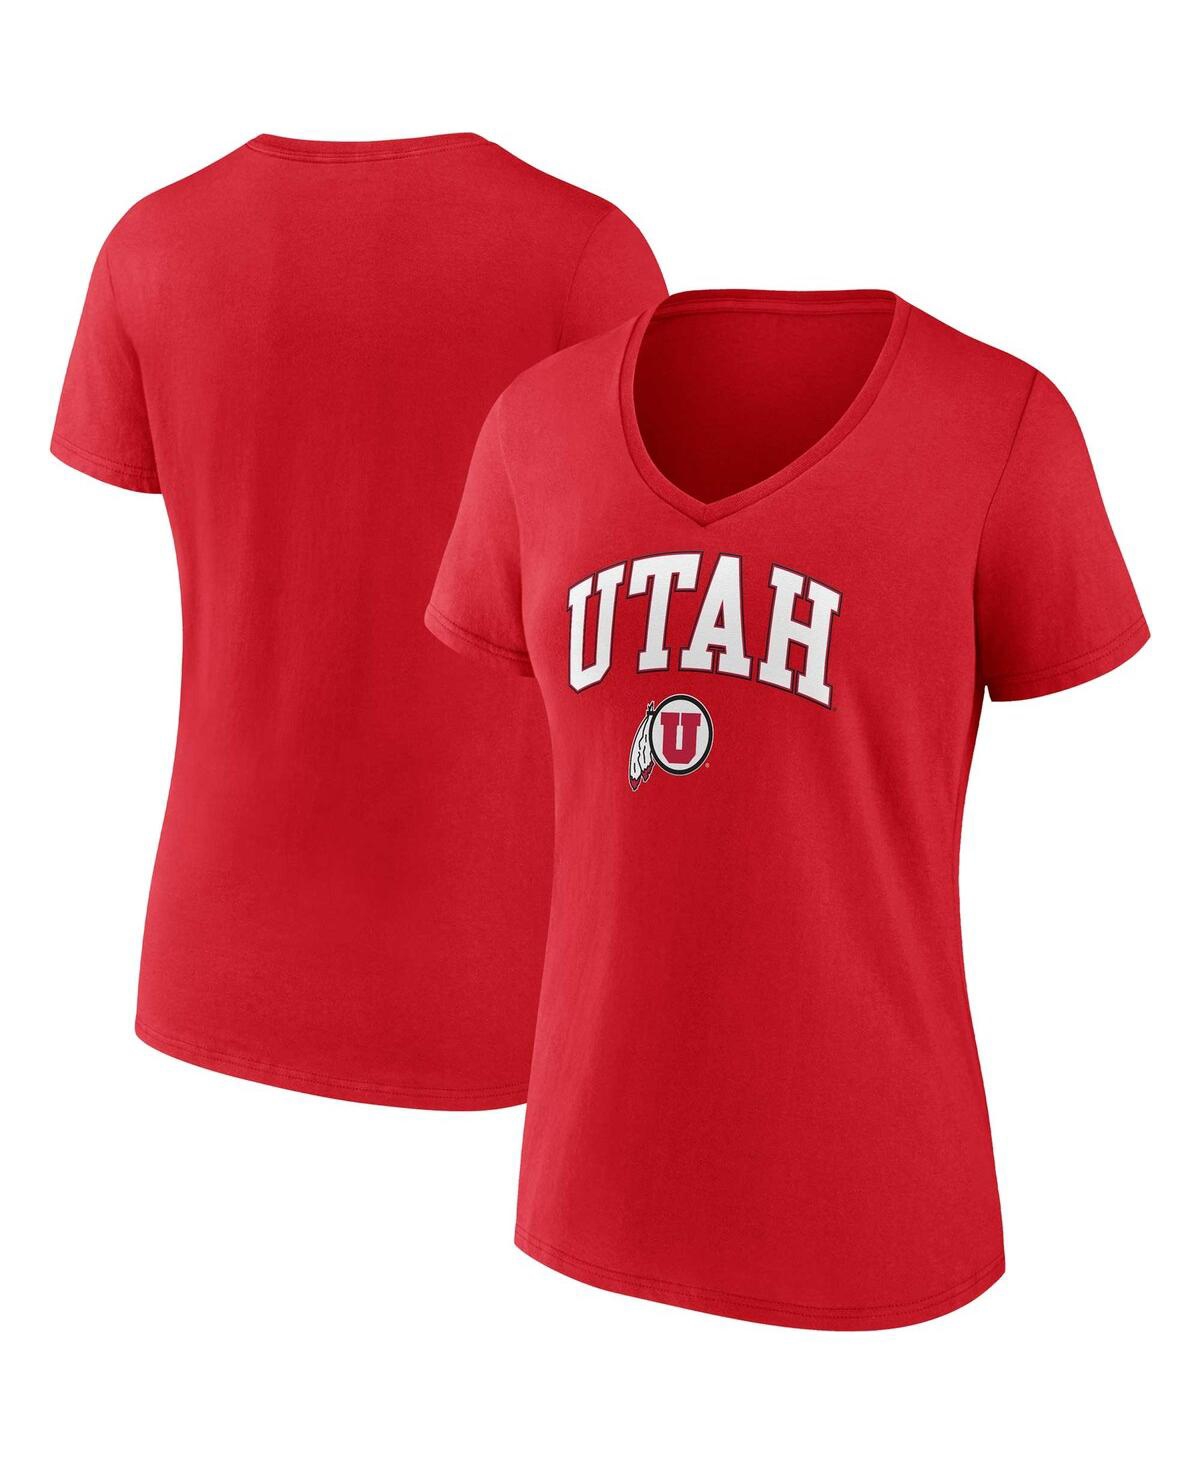 Women's Fanatics Red Utah Utes Evergreen Campus V-Neck T-shirt - Red